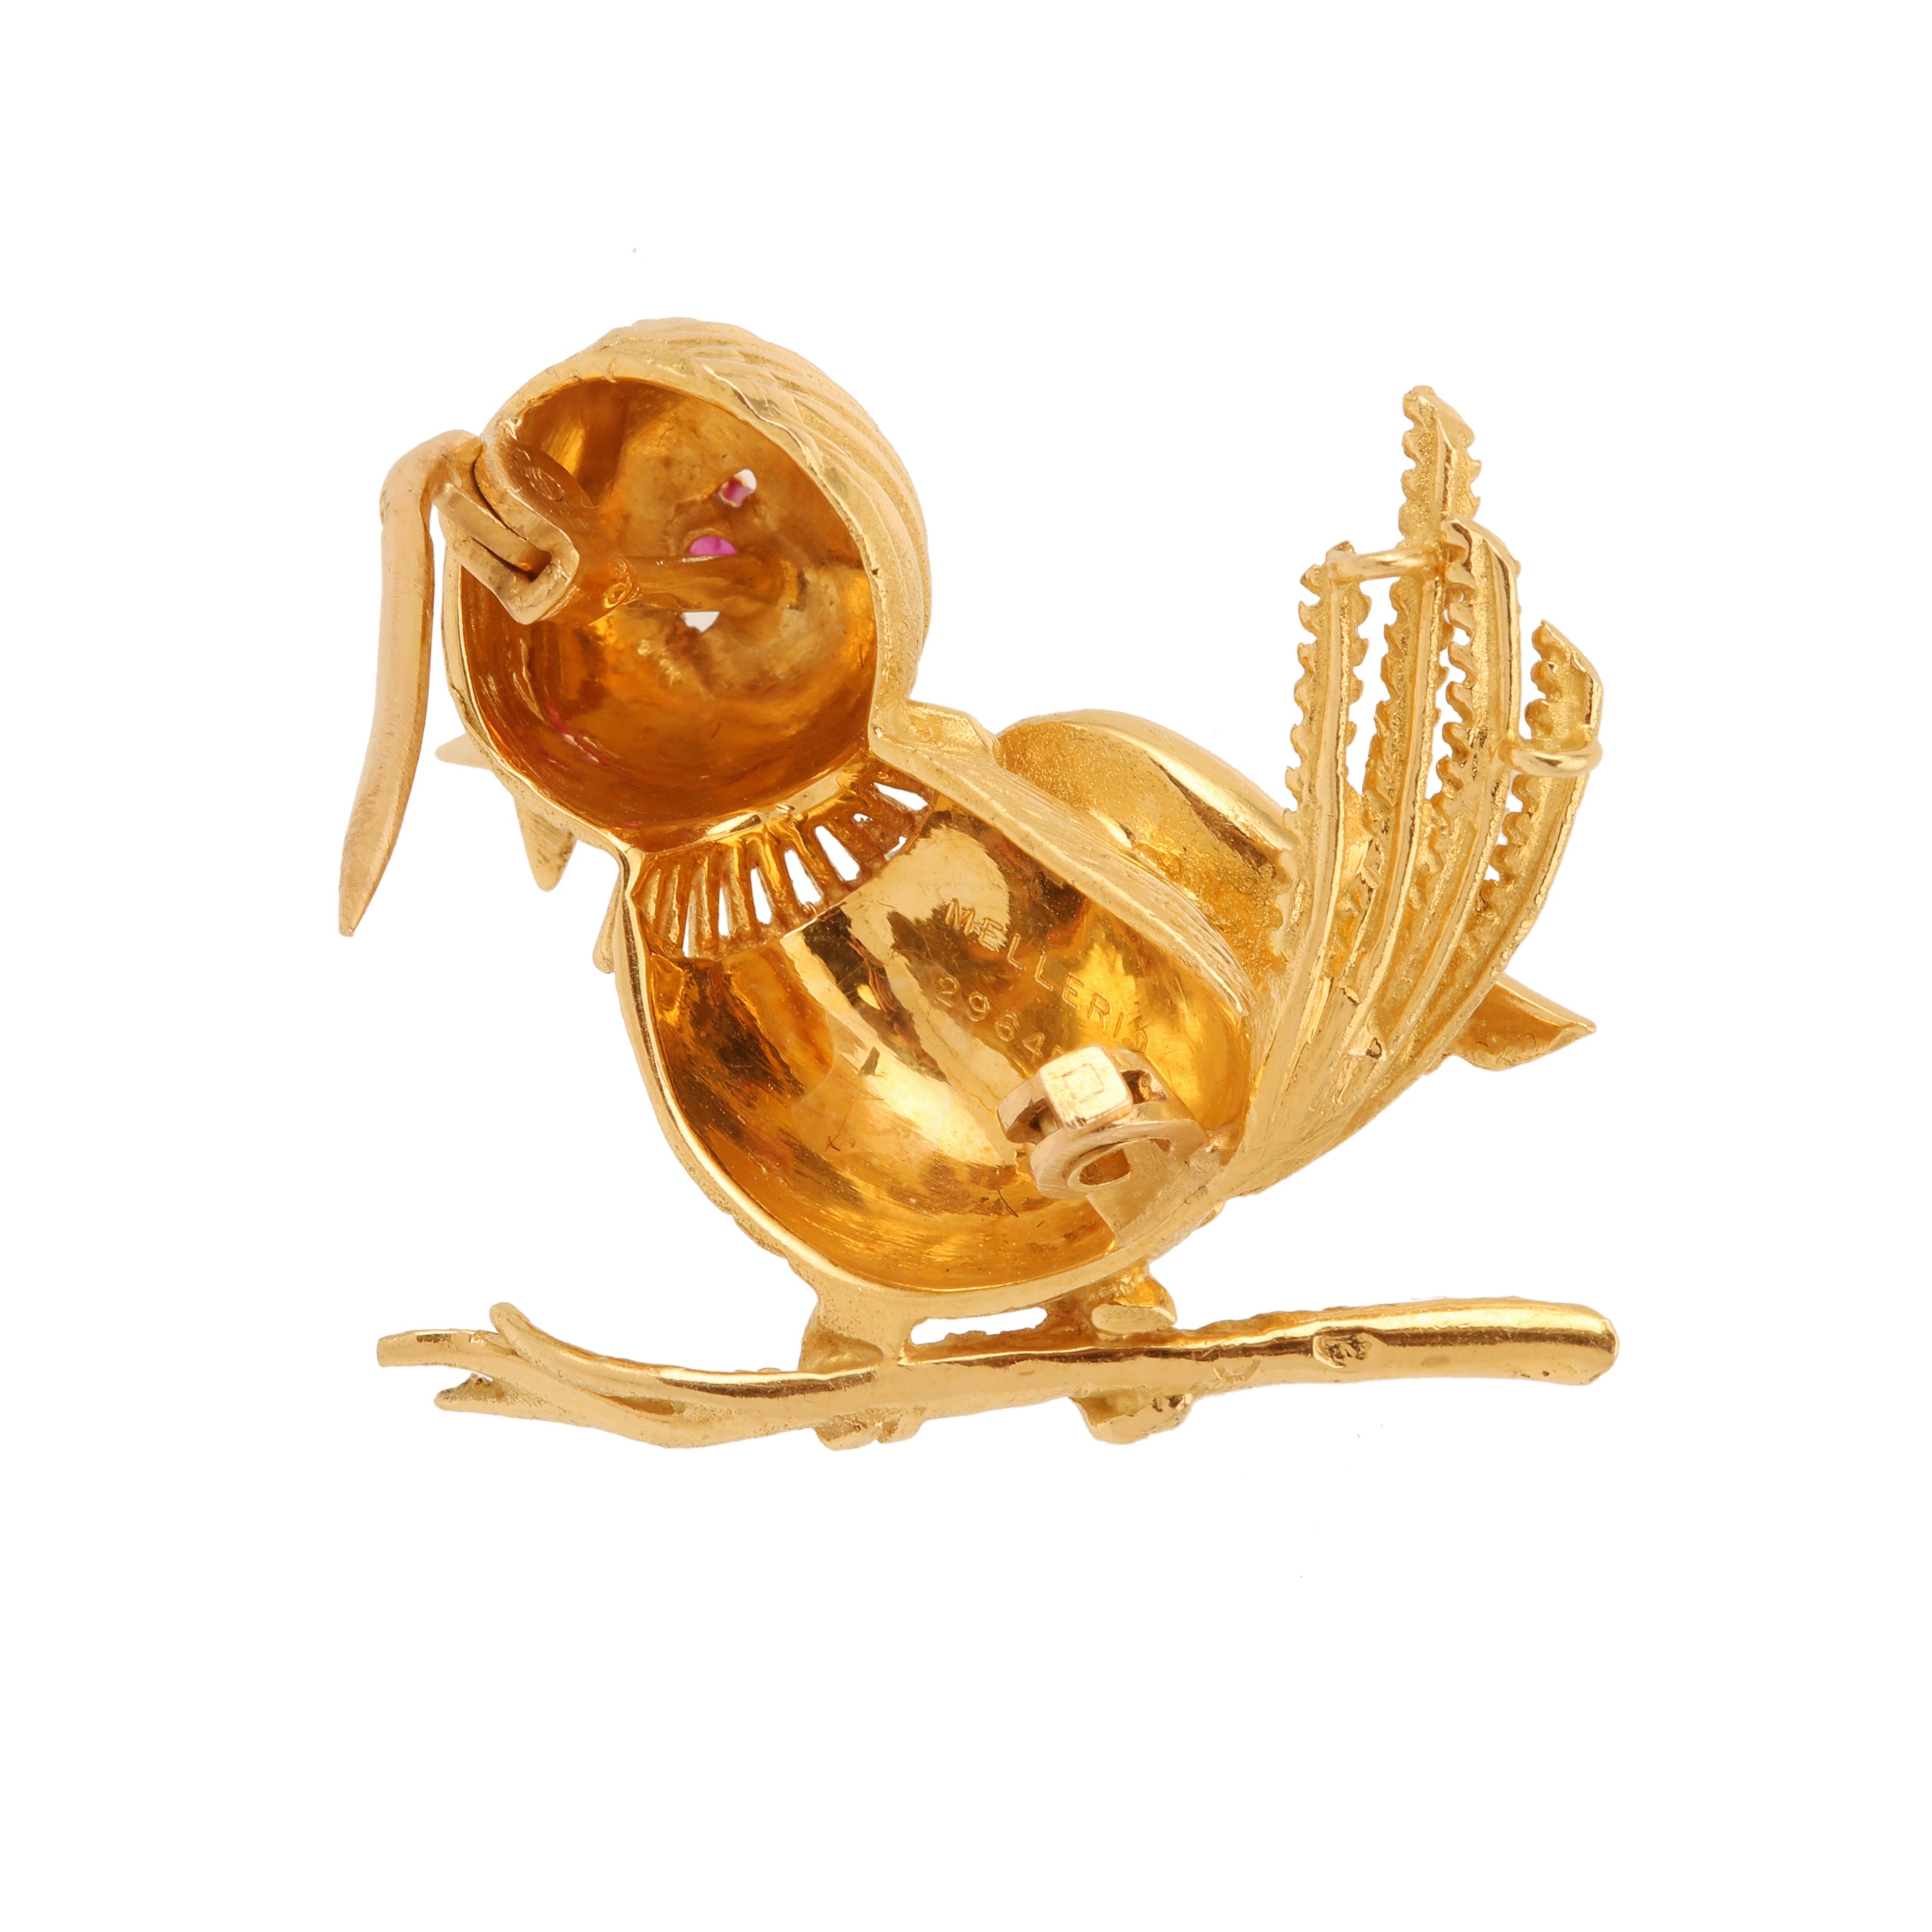 Mellerio Dits Meller Ruby 18 Carat Yellow Gold Chick Brooch